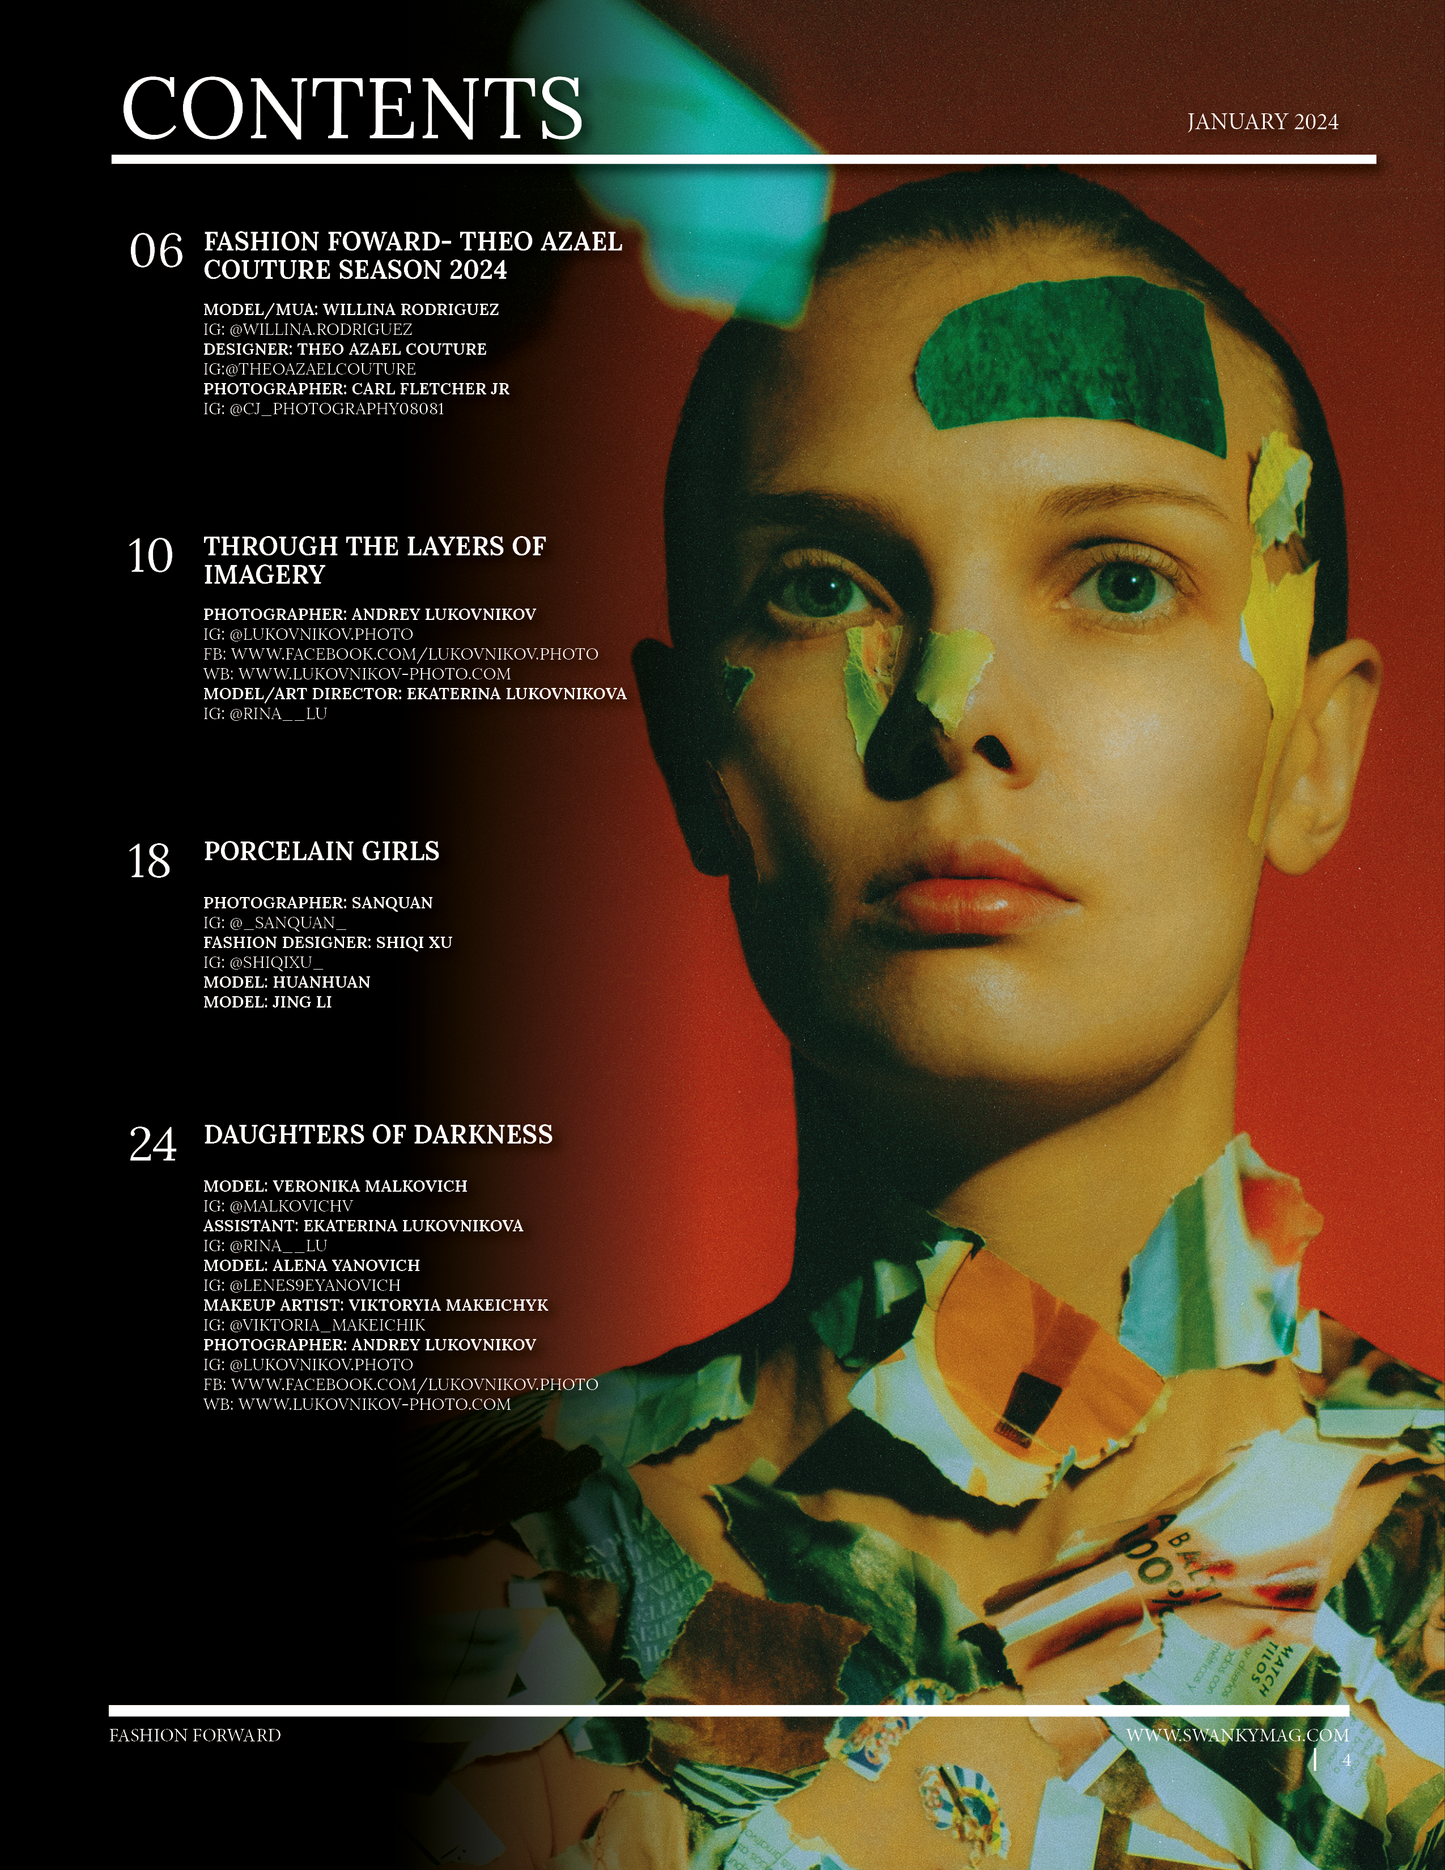 Swanky Fashion Magazine - January 2024: The Fashion Edition Issue 2